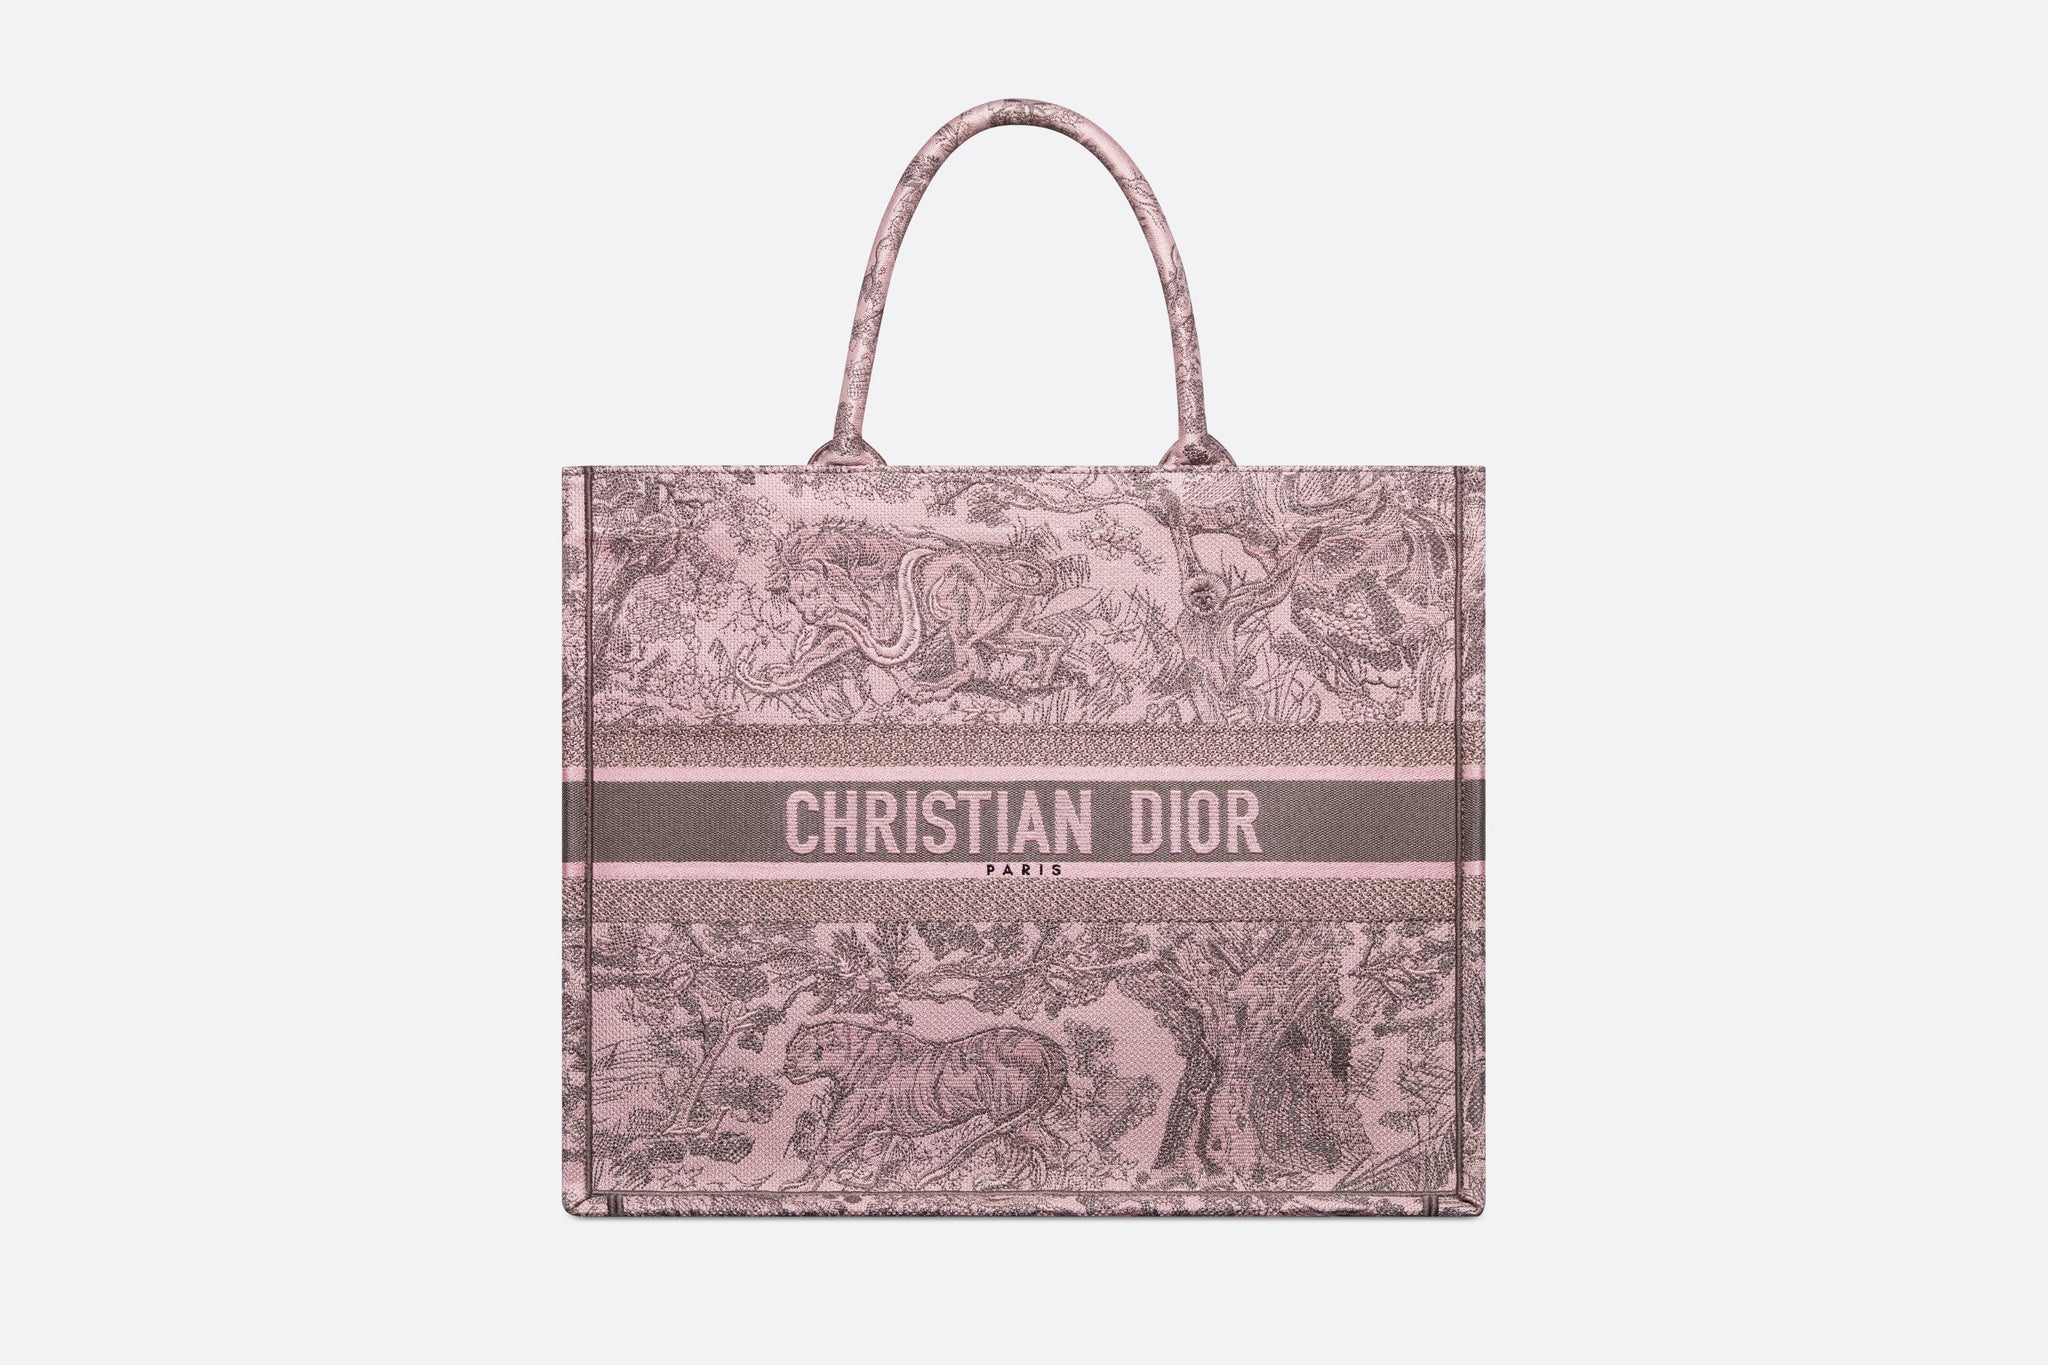 Dior Saddle Bag  Should You Buy Vintage or New  Life with MBB   Fashion and Lifestyle Blog  Dubai UAE